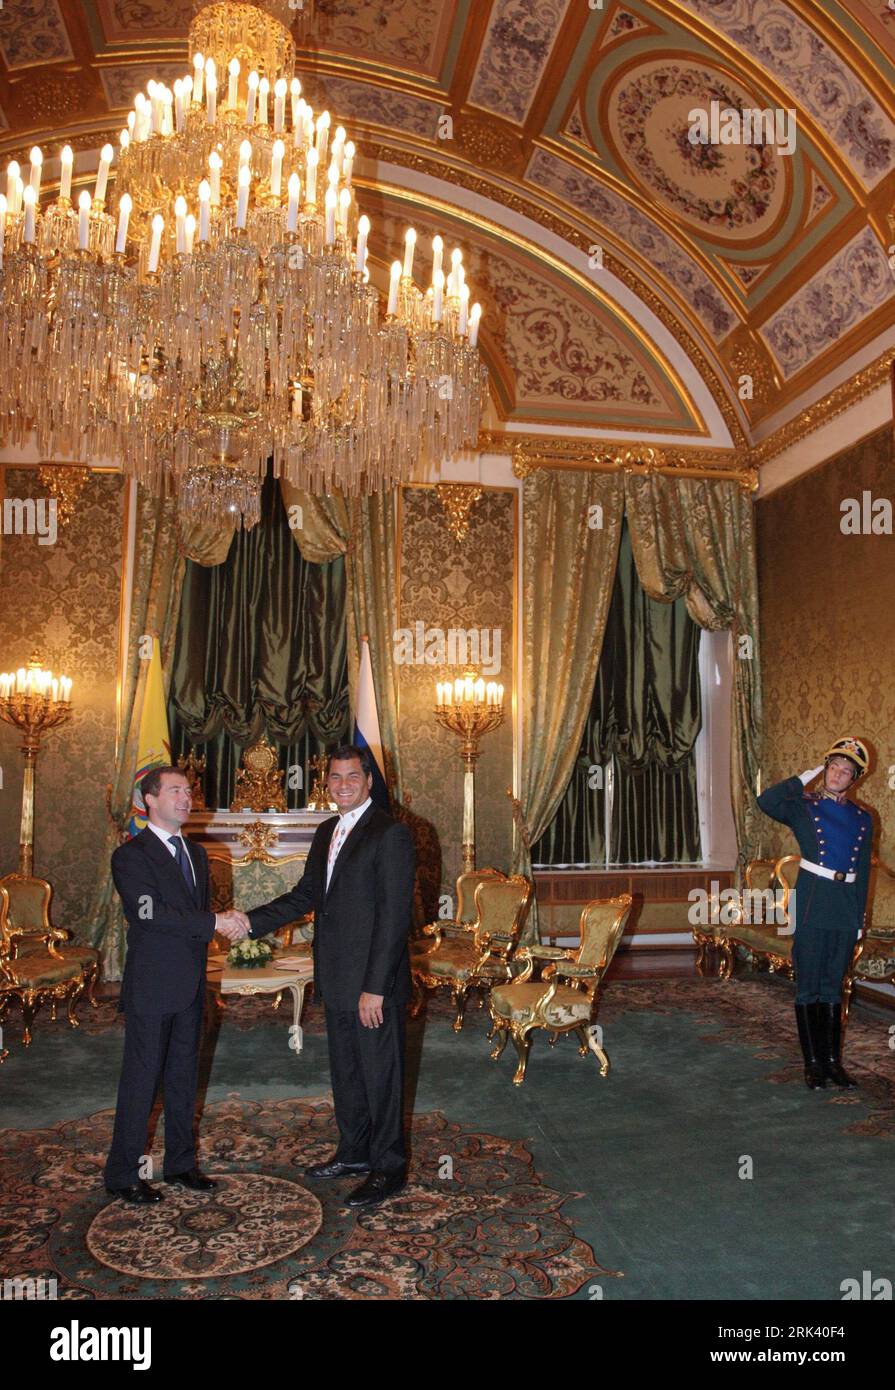 Bildnummer: 53564409  Datum: 29.10.2009  Copyright: imago/Xinhua (091030) -- MOSCOW, Oct. 30, 2009 (Xinhua) -- Russian President Dmitry Medvedev (L) meets with his visiting Ecuadorian counterpart Rafael Correa (C) in Moscow, Russia, Oct. 29, 2009. (Xinhua) (hdt) (1)RUSSIA-ECUADOR-PRESIDENT-DIPLOMACY PUBLICATIONxNOTxINxCHN People Politik kbdig xsk 2009 hoch     Image number 53564409 Date 29 10 2009 Copyright Imago XINHUA  Moscow OCT 30 2009 XINHUA Russian President Dmitry Medvedev l Meets With His Visiting Ecuadorian Part Rafael Correa C in Moscow Russia OCT 29 2009 XINHUA HDT 1 Russia Ecuador Stock Photo